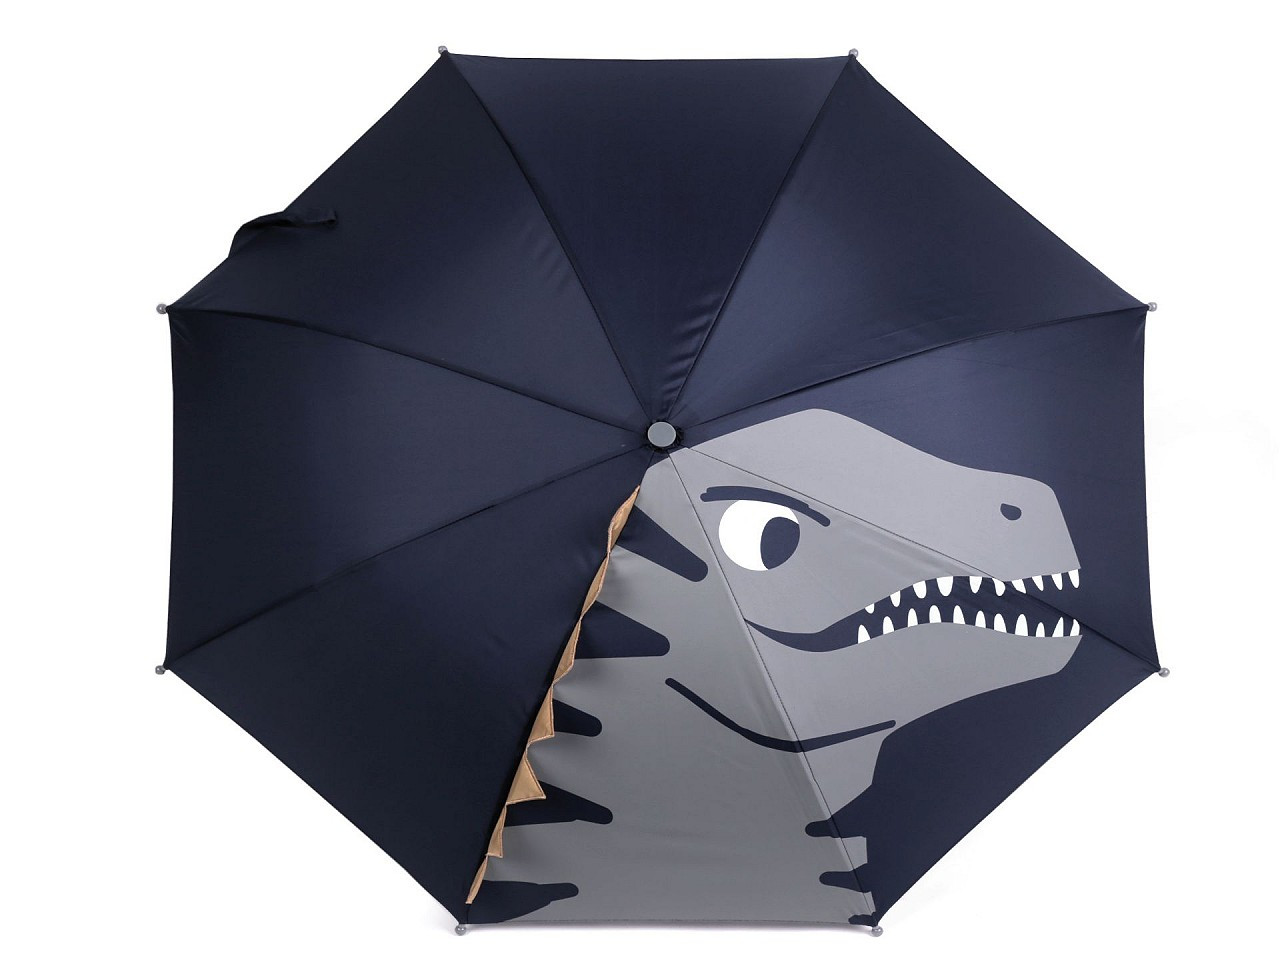 Dětský deštník jednorožec, dinosaurus, barva 2 modrá tmavá dinosaurus